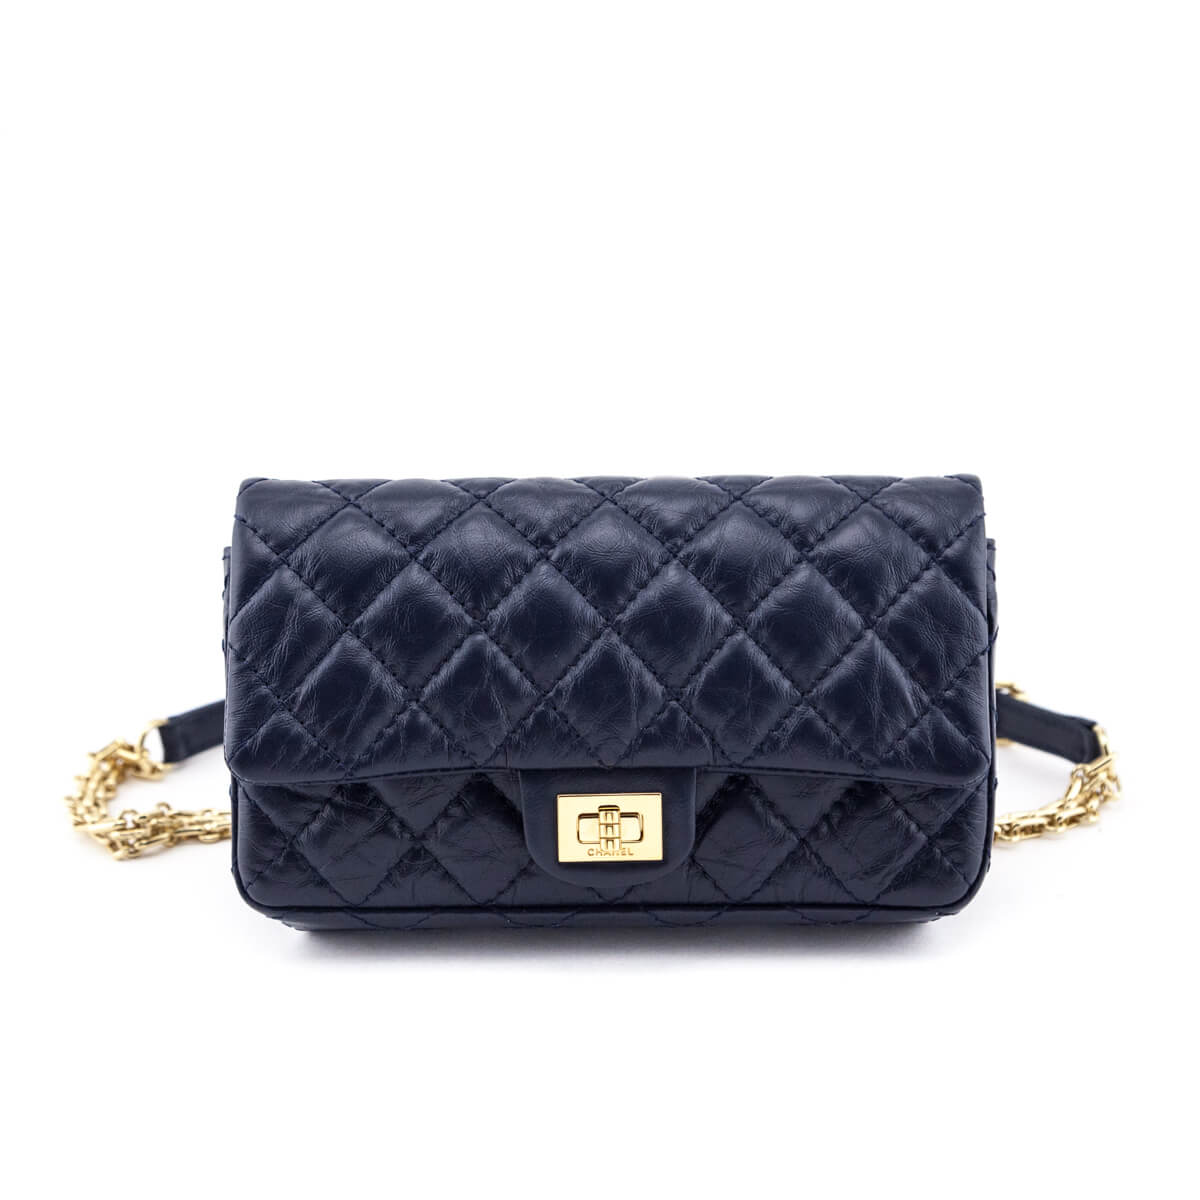 Chanel Black Drawstring Handbags - 79 For Sale on 1stDibs  chanel  drawstring bag, chanel drawstring backpack, drawstring bag chanel